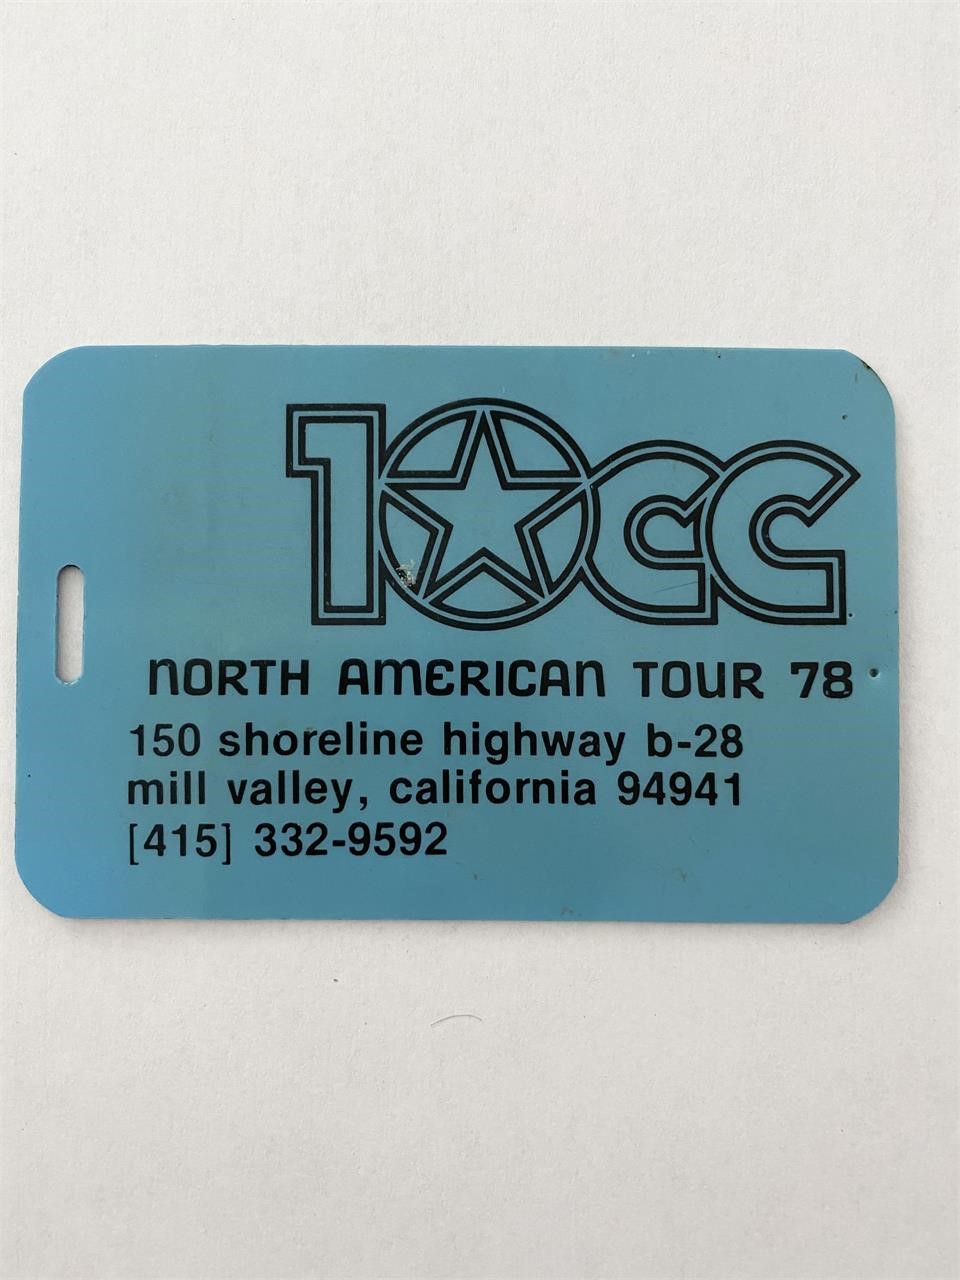 10cc North American Tour '78 Luggage tag